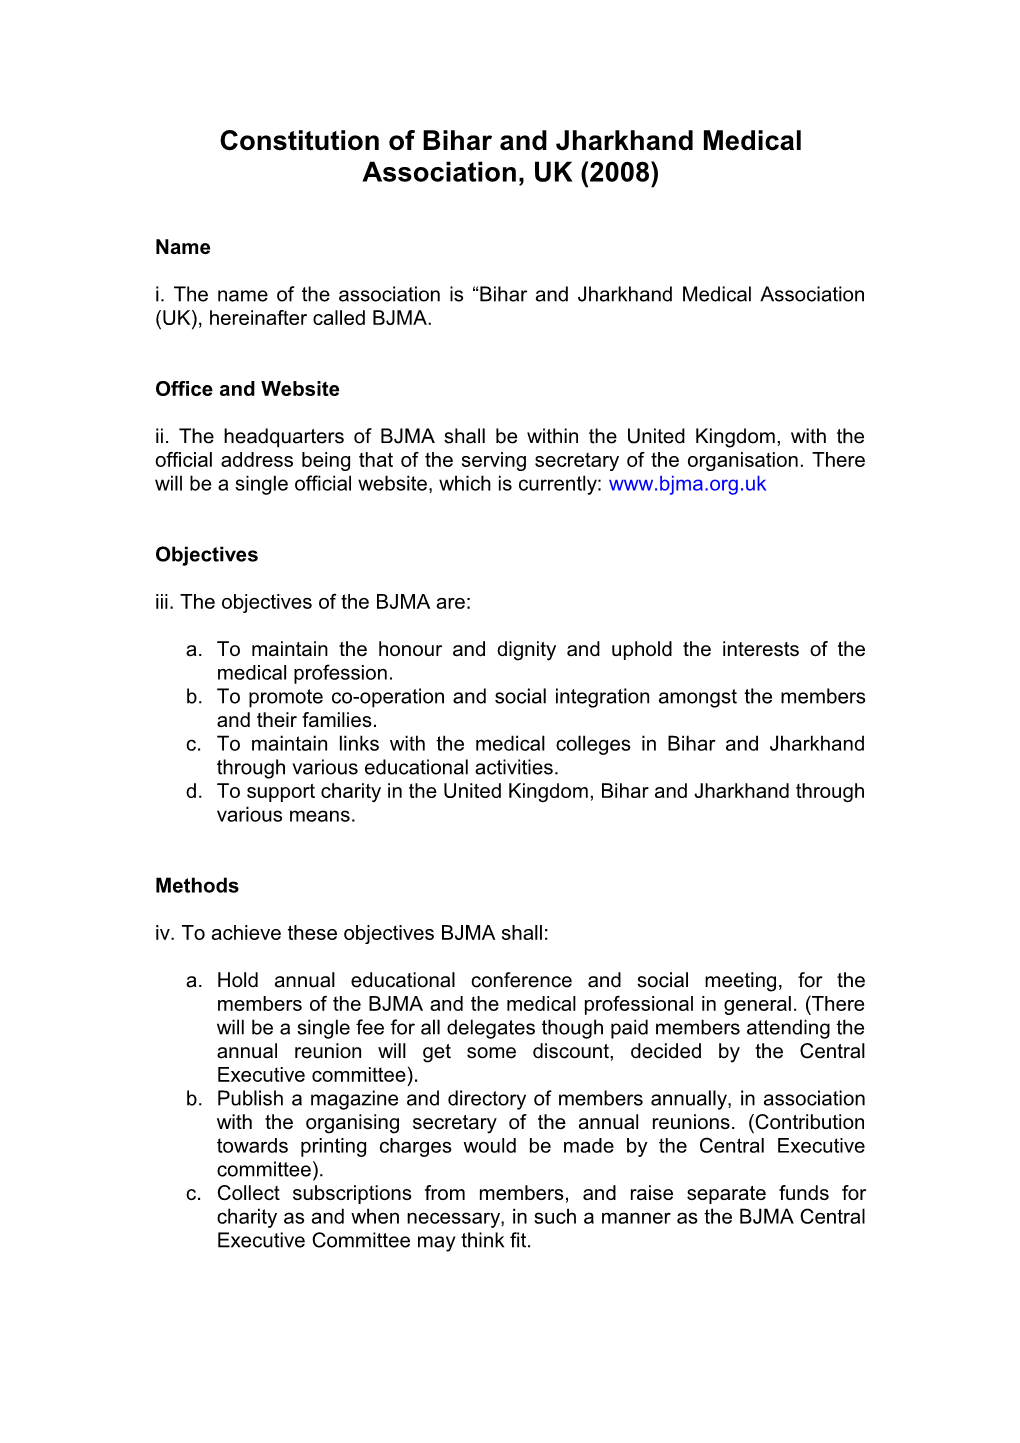 Constitution of Bihar and Jharkhand Medical Association, UK